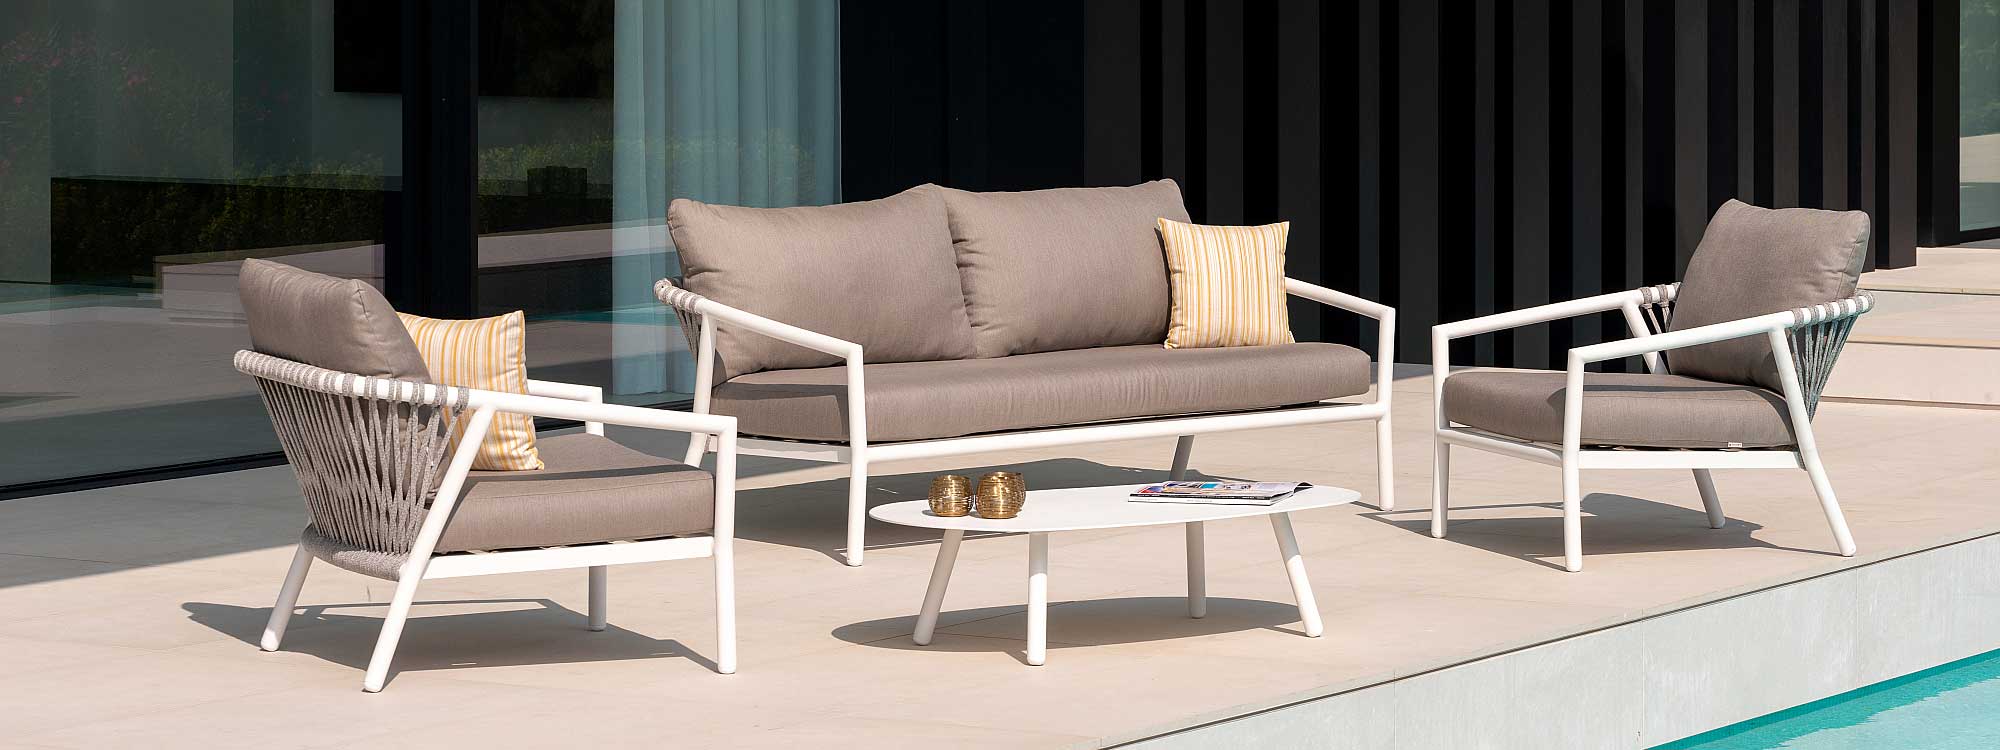 Image of Jati & Kebon Kapra 2 seat garden sofa and outdoor lounge chairs with white tubular frames and Grey Melange rope on sunlit terrace